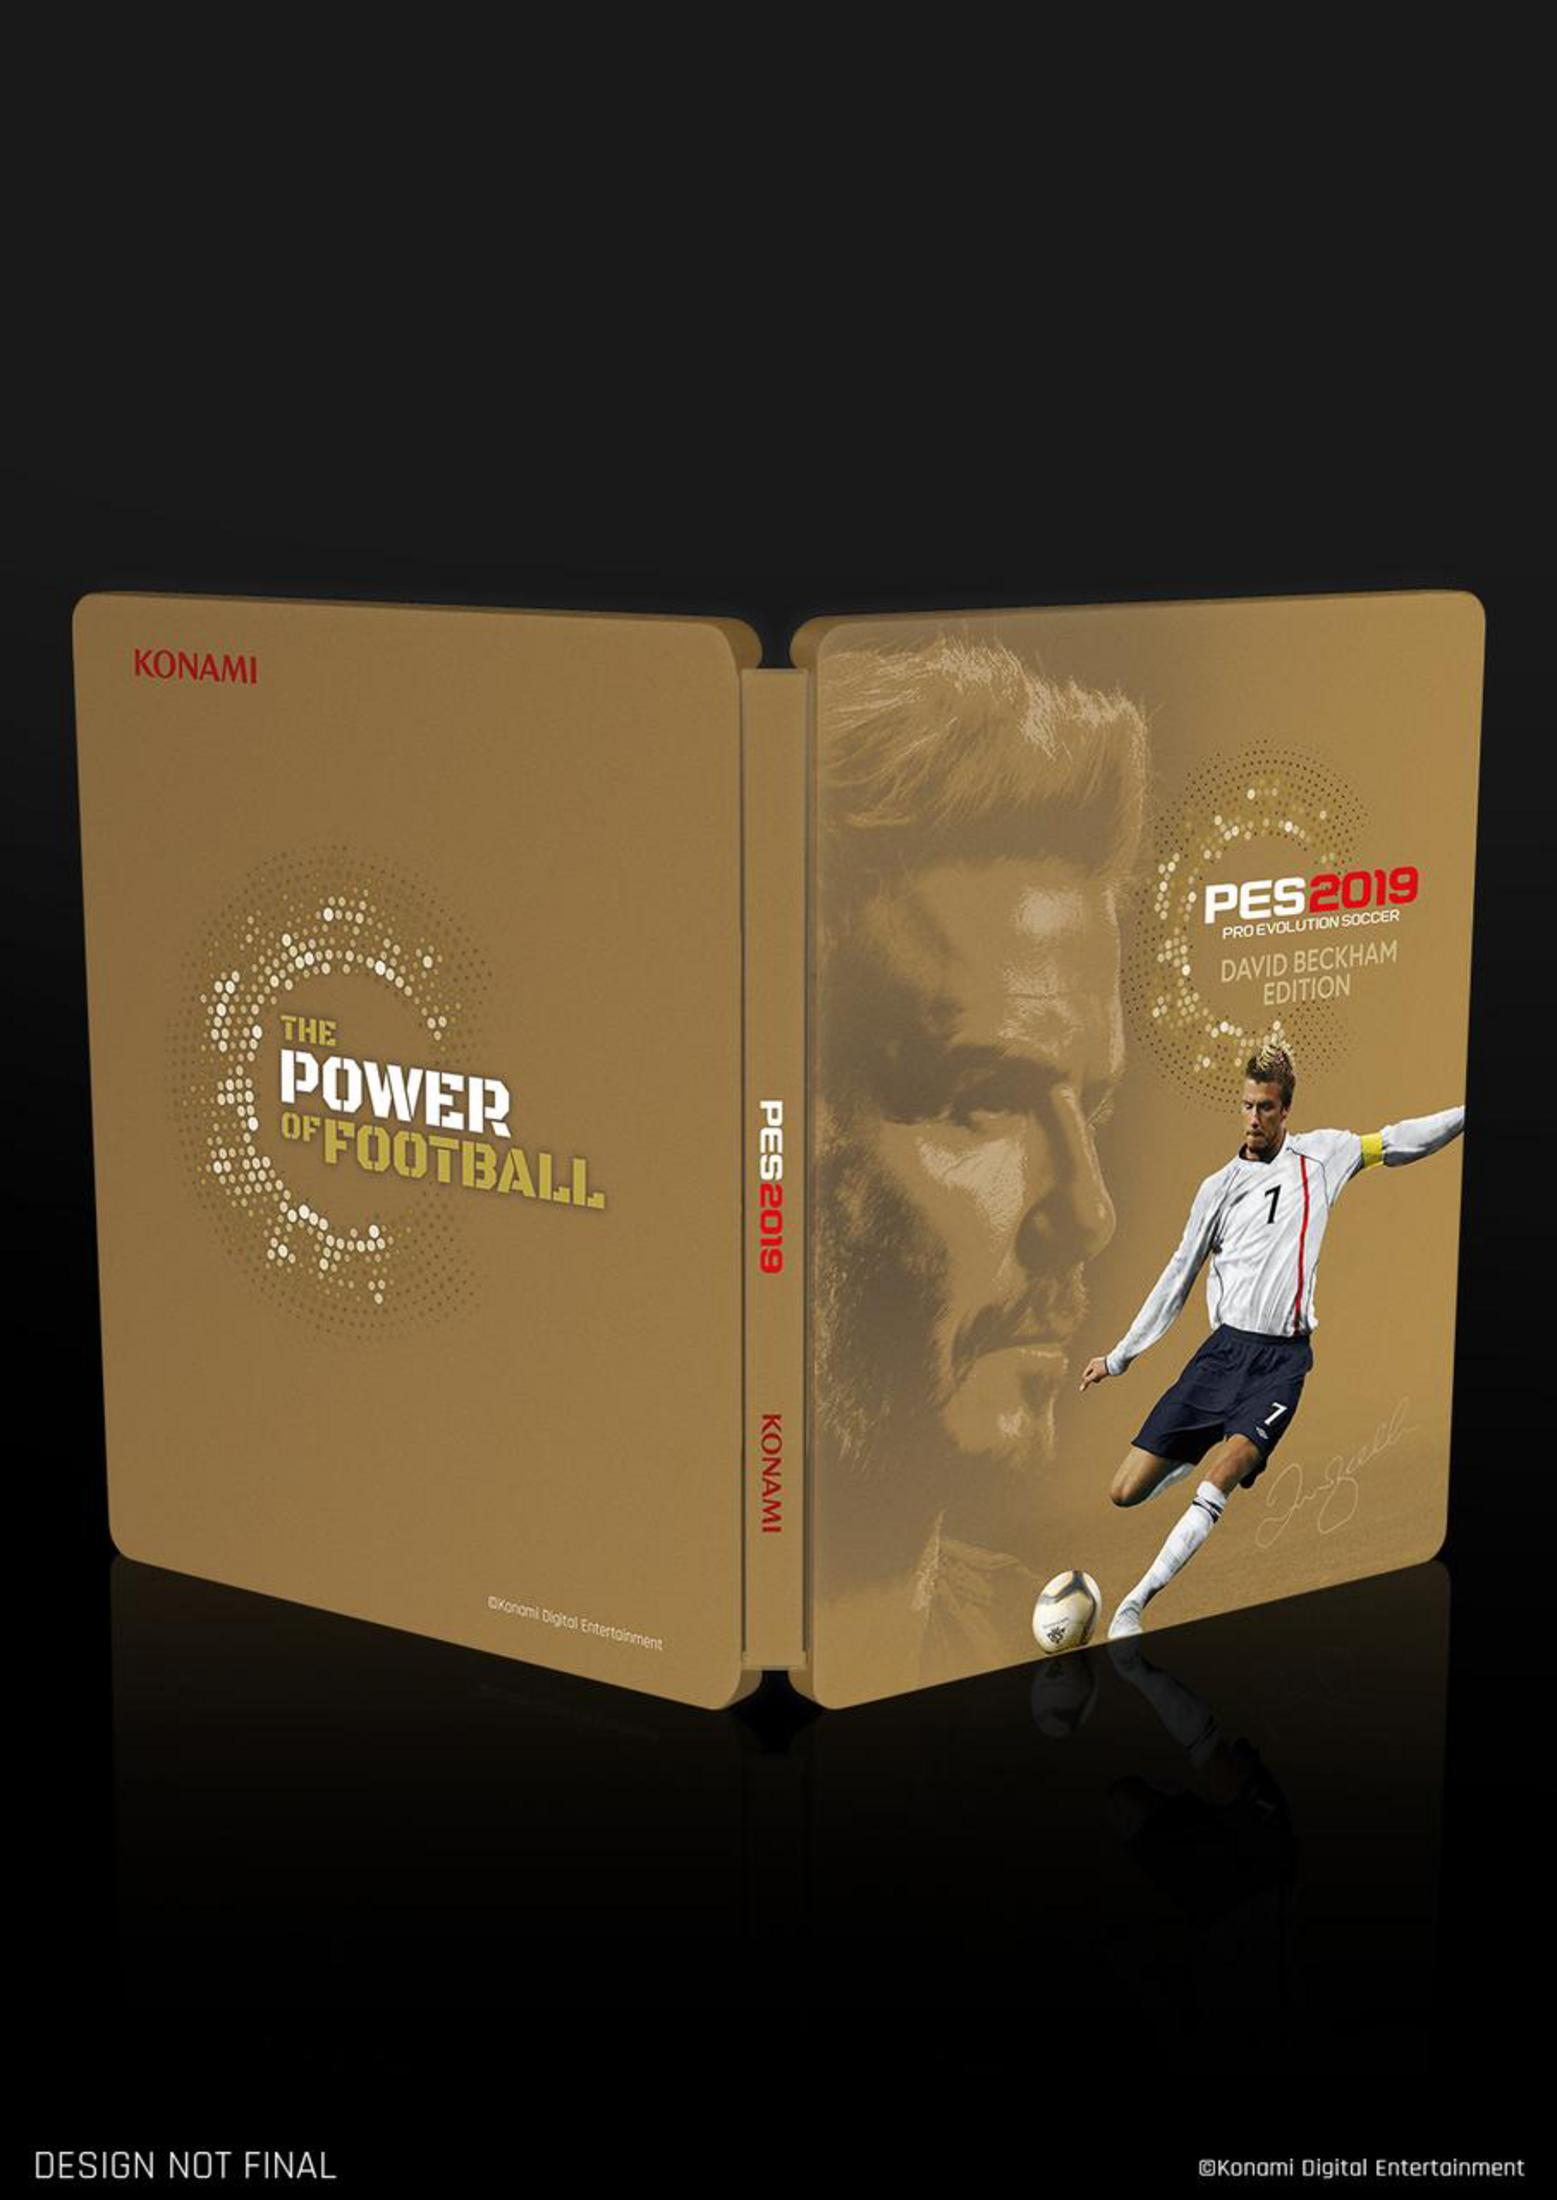 PES 2019 Ed. - - David Beckham Evolution Pro [PlayStation 4] Soccer 2019 PS4